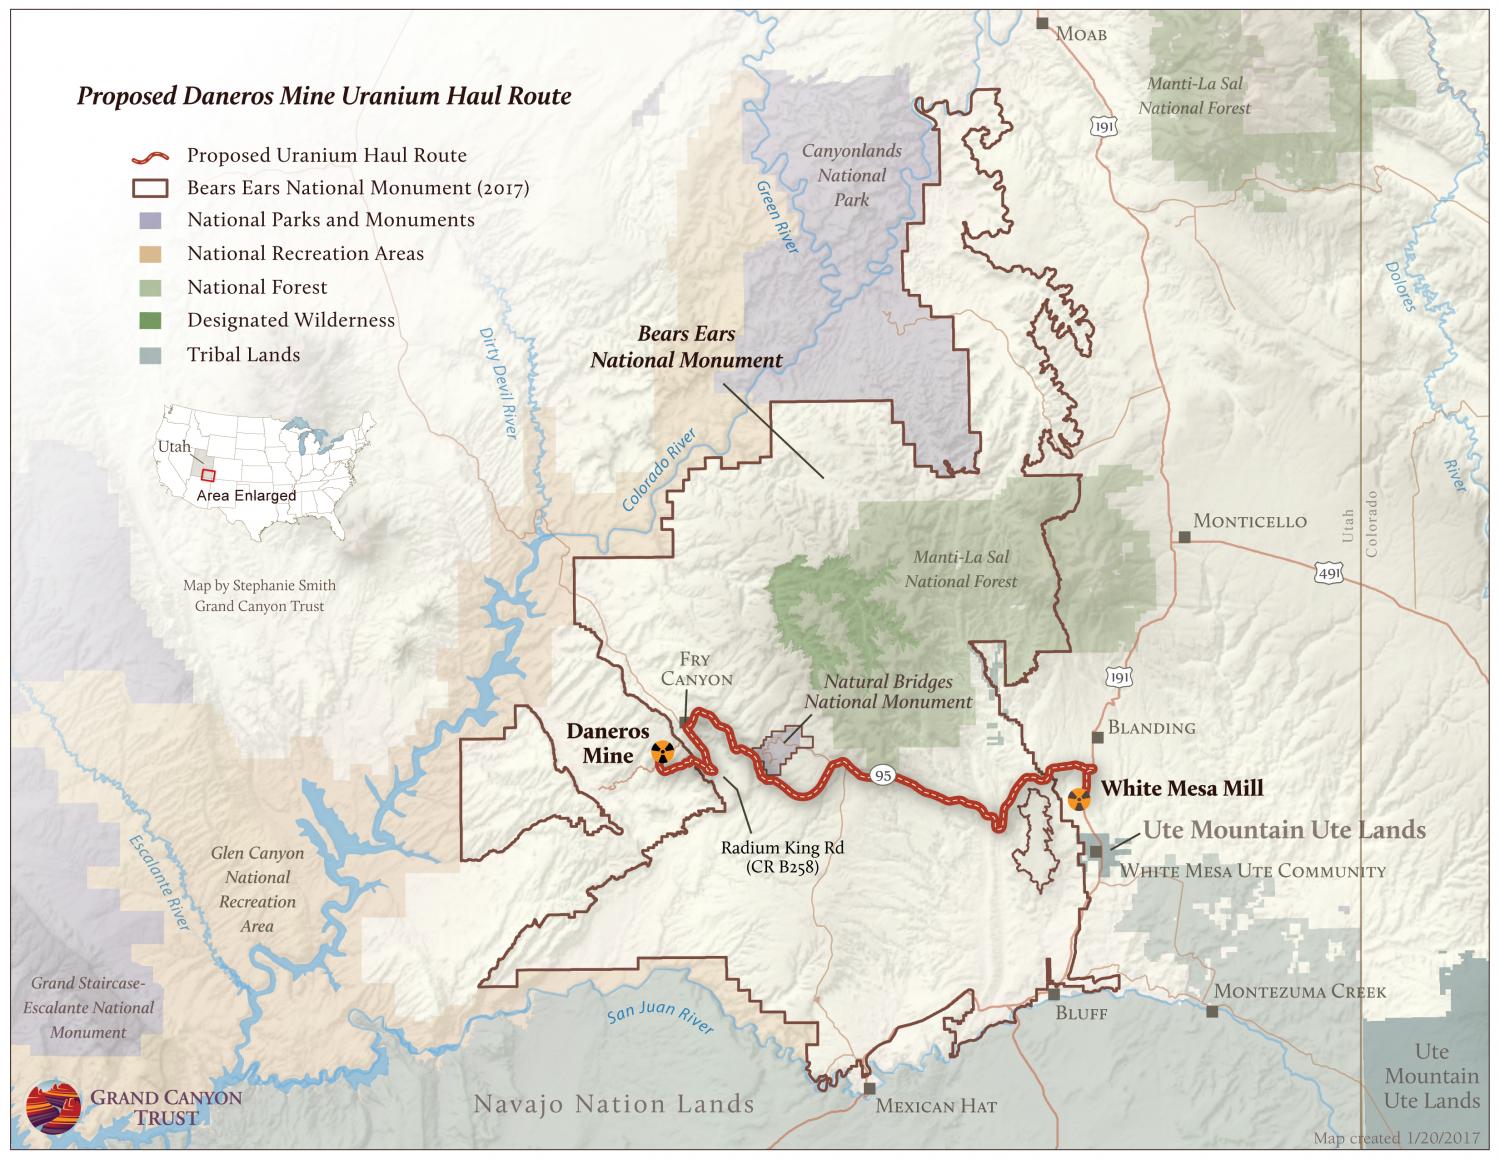 Proposed uranium haul route from Daneros Mine to White Mesa Mill.